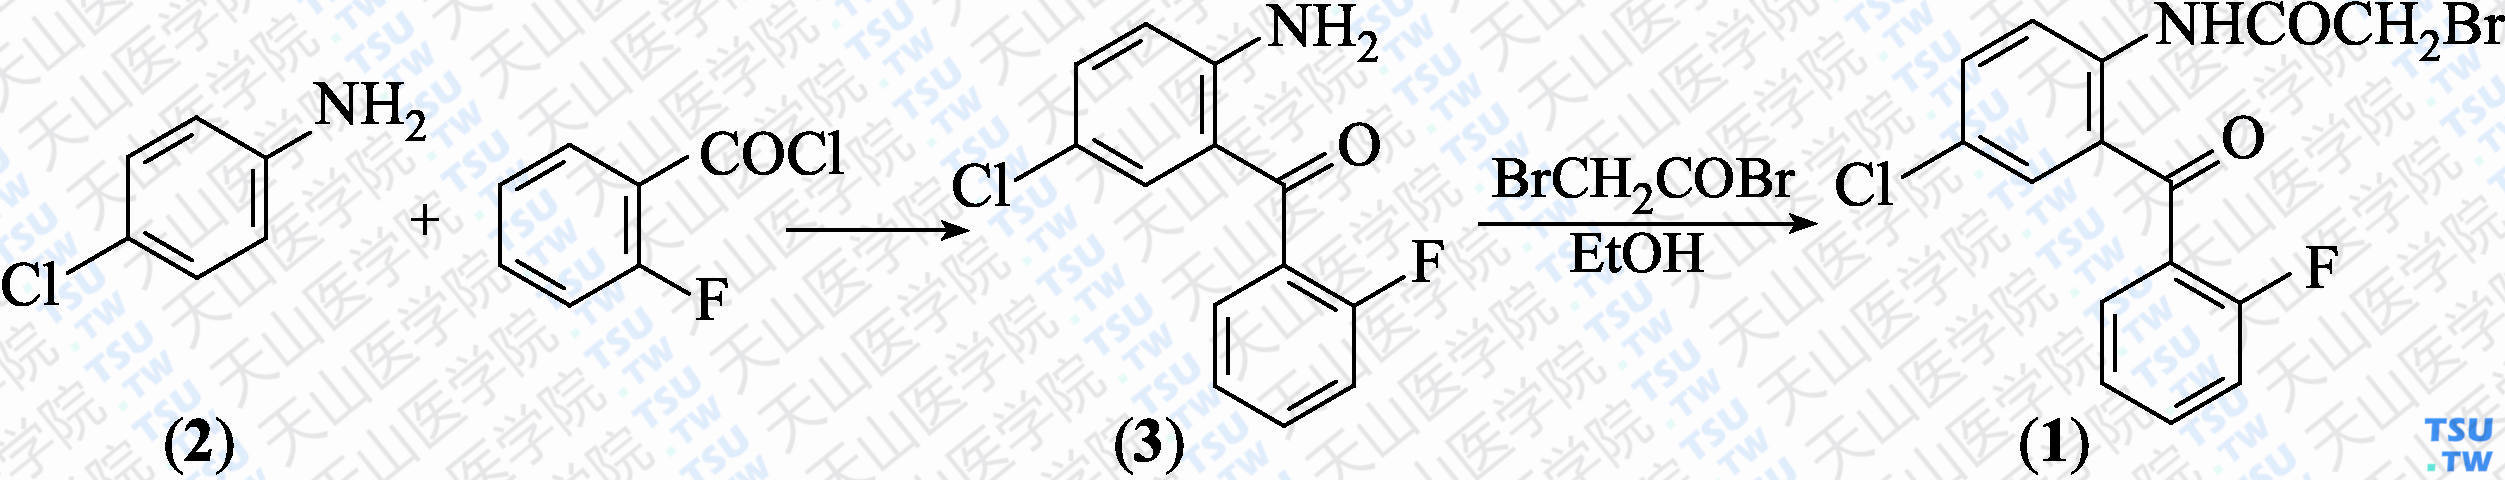 2-（2-溴乙酰氨基）-5-氯-2'-氟二苯酮（分子式：C<sub>15</sub>H<sub>10</sub>BrClFNO<sub>2</sub>）的合成方法路线及其结构式